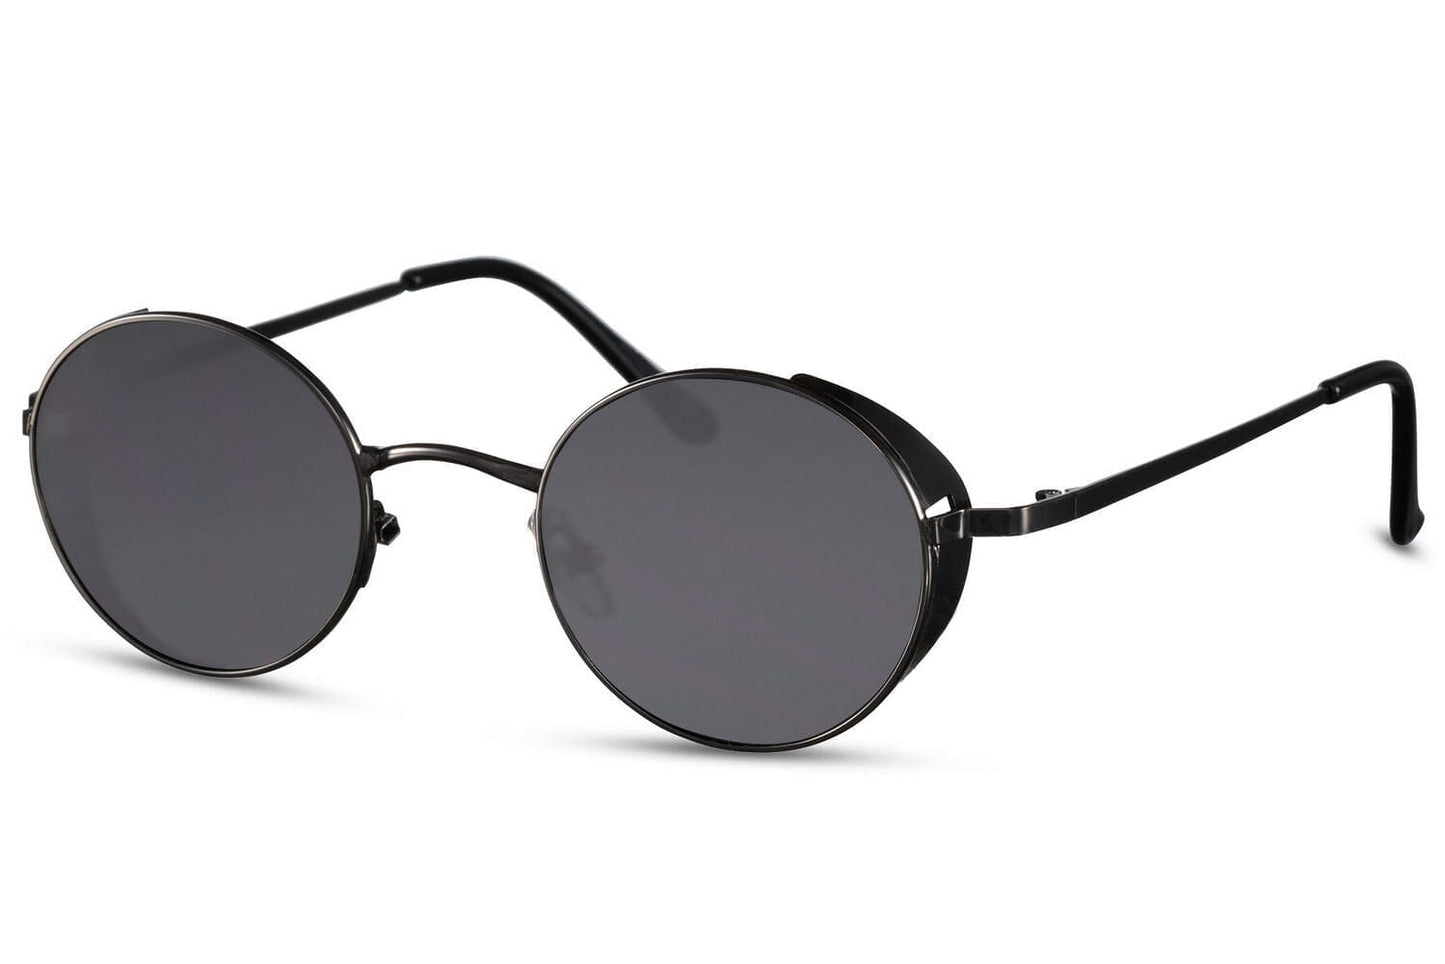 Black retro sunglasses. Metal frames. UV400 protected.